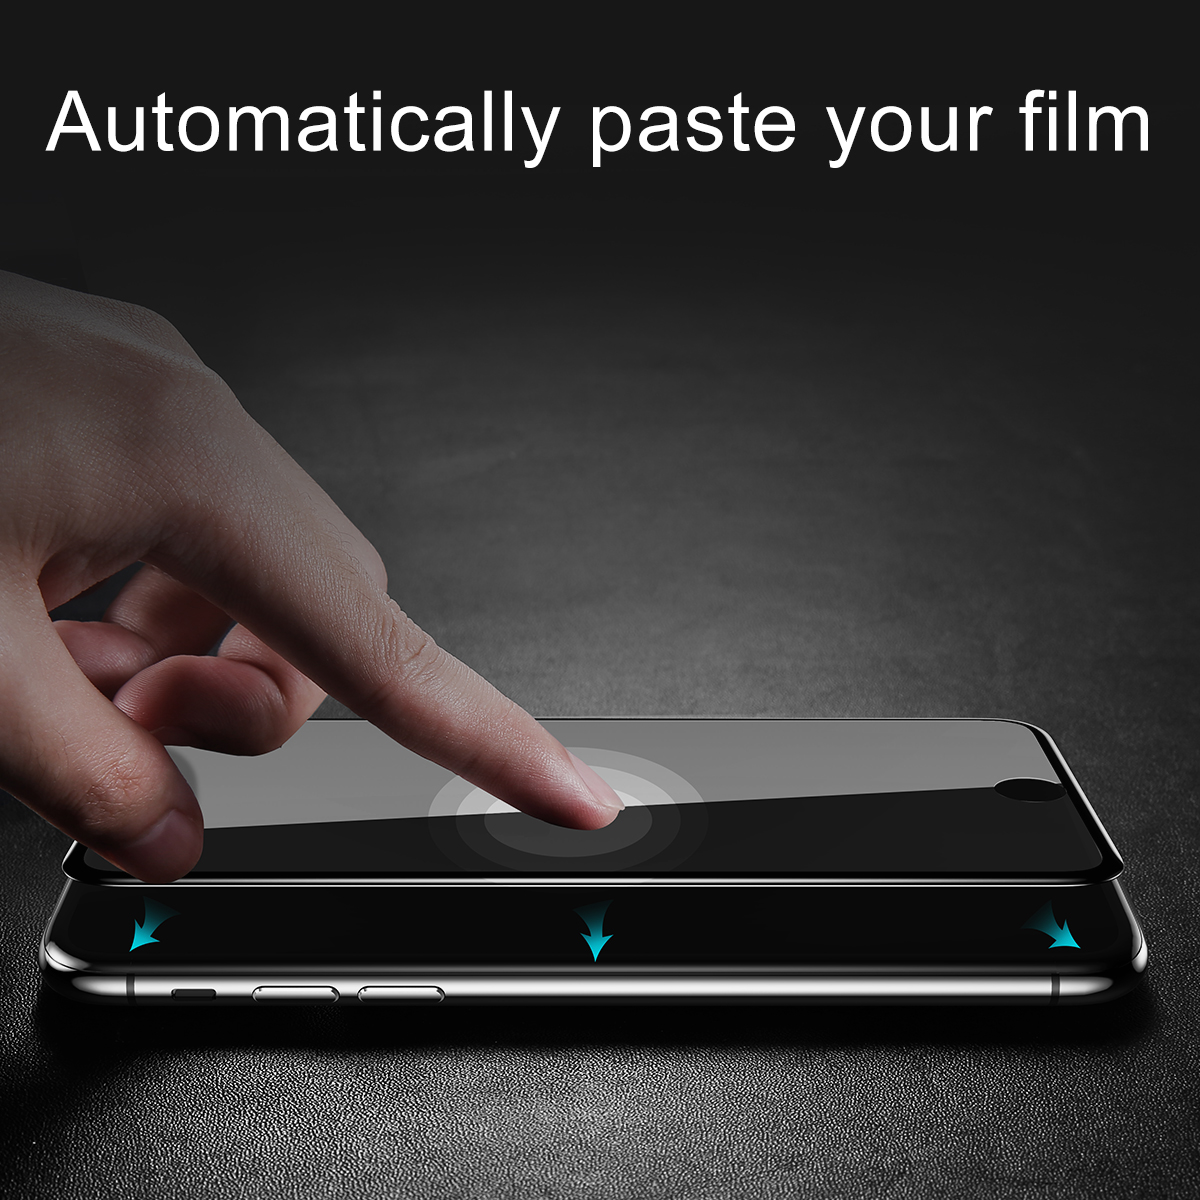 Защитное стекло Baseus PET Soft Edge Tempered Glass Film для iPhone 6/6S/7/8 Plus (Black)